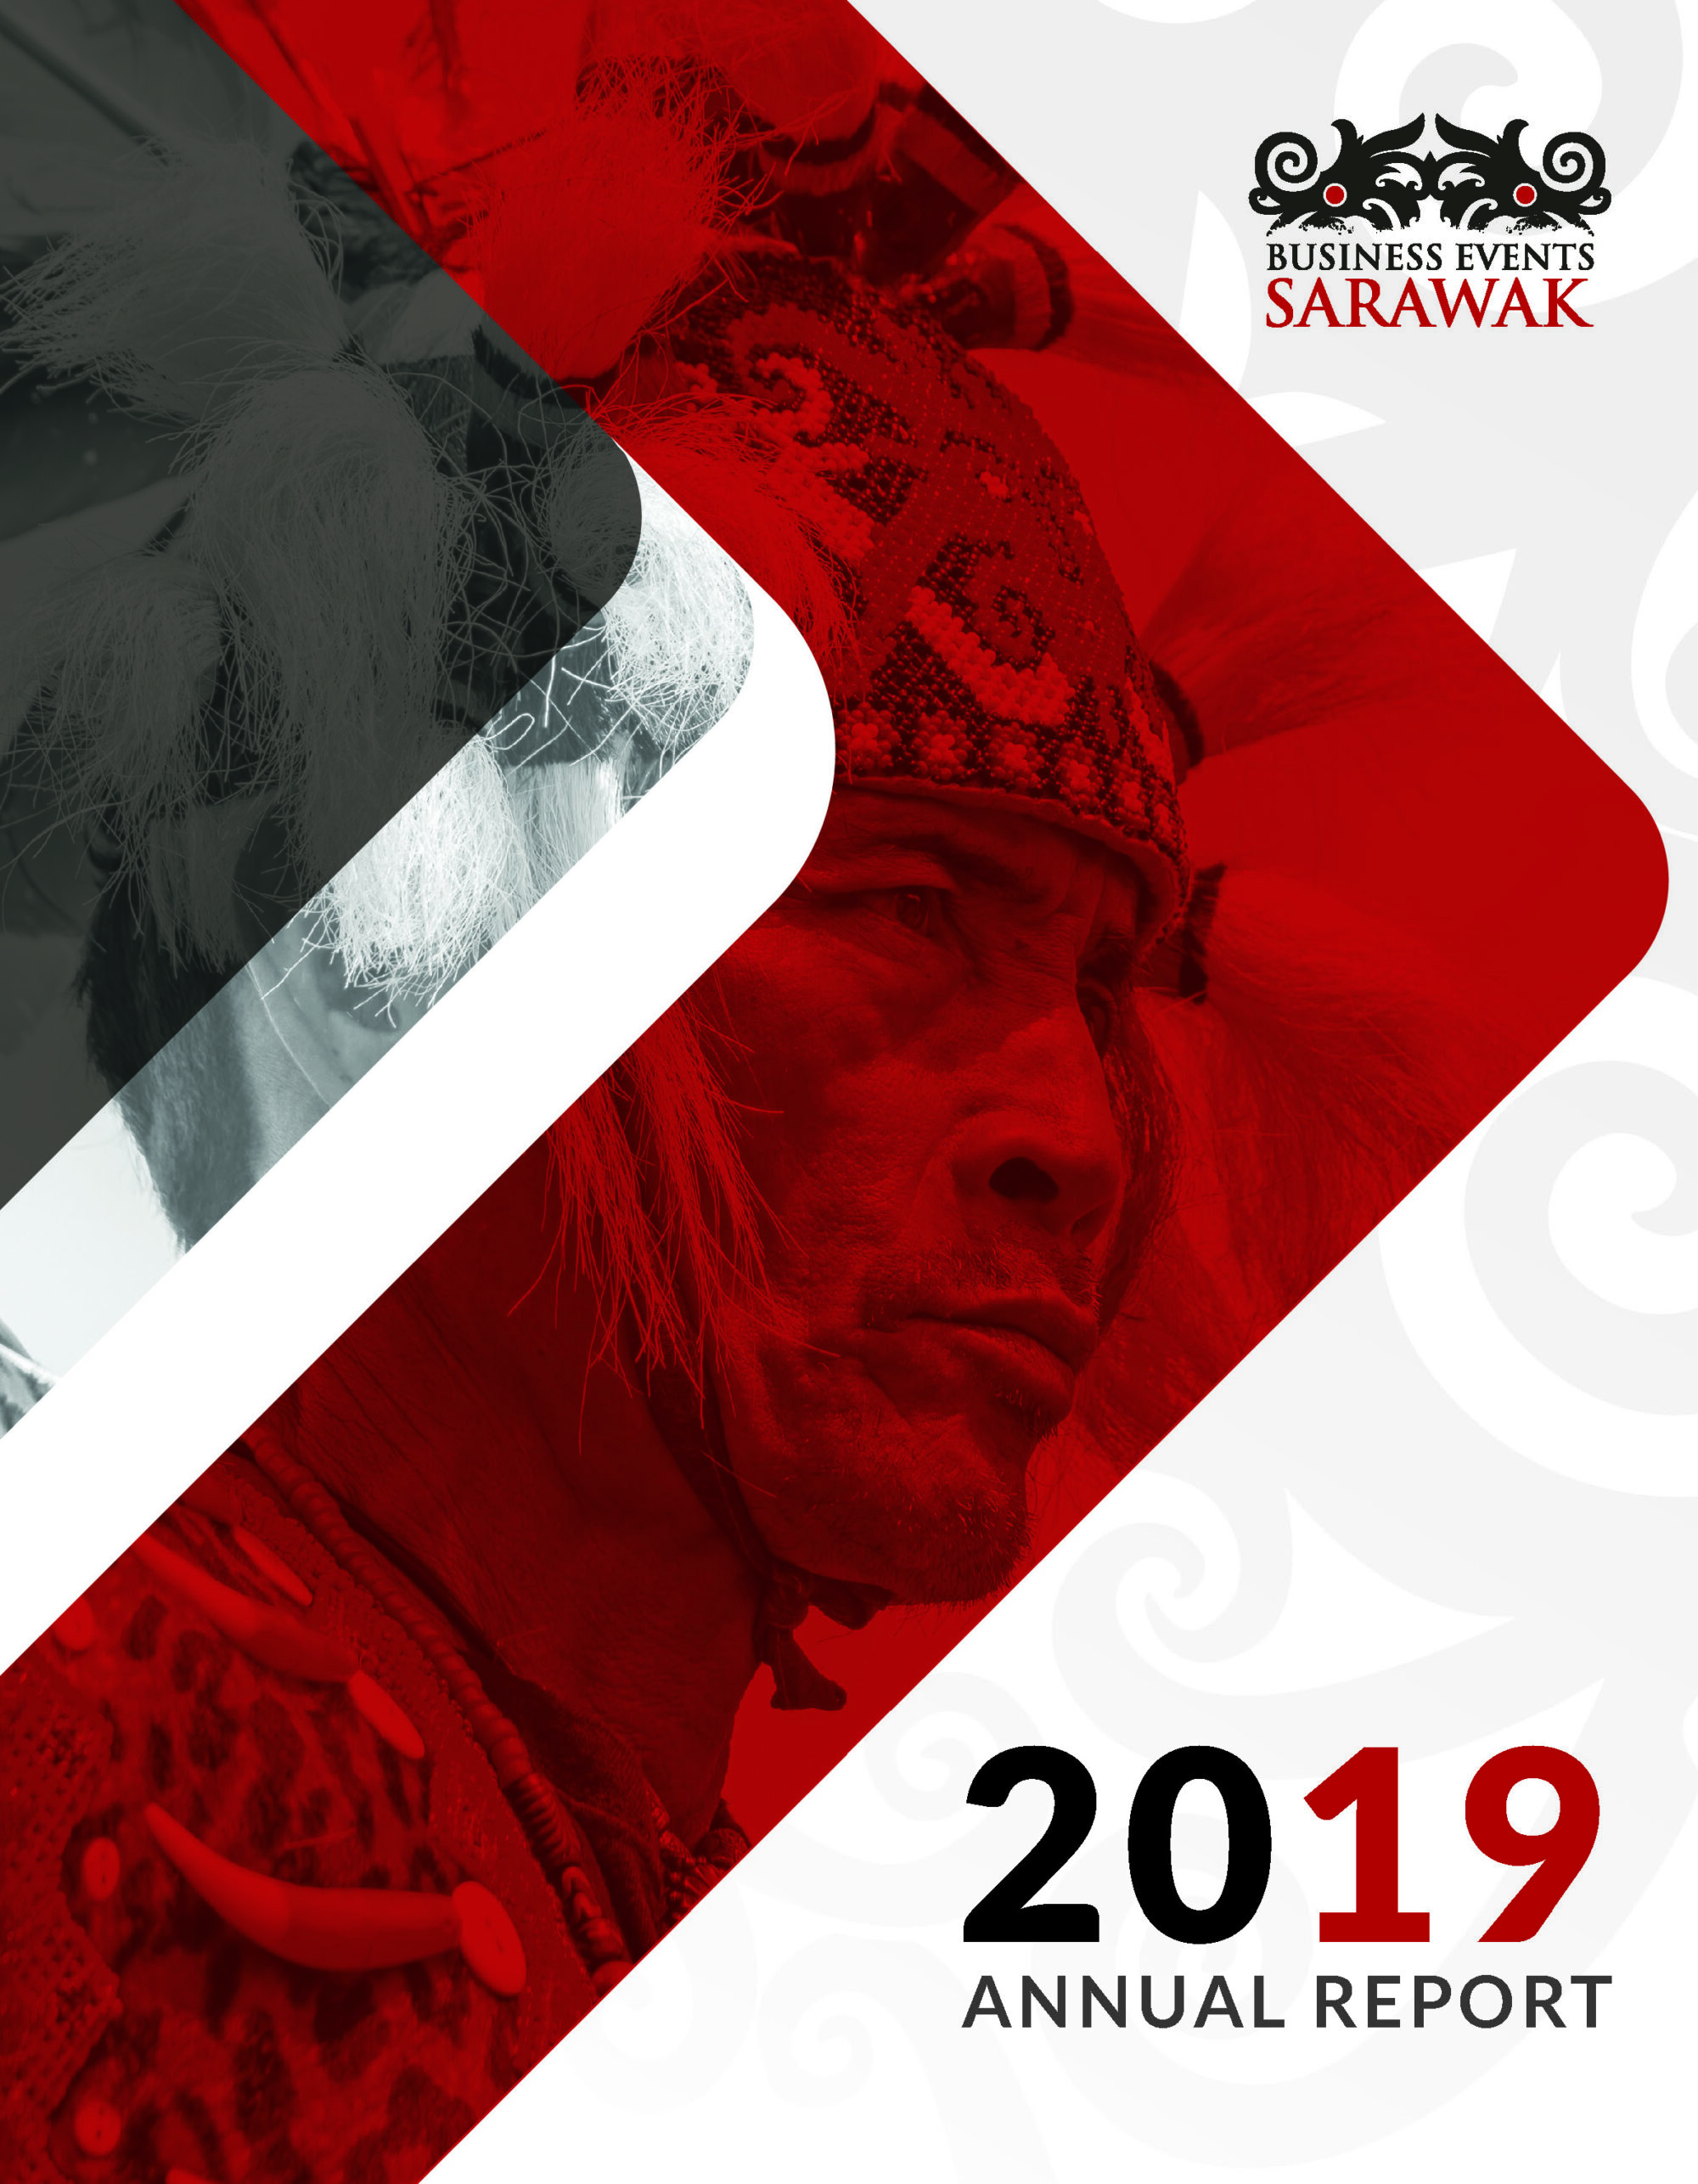 BESarawak Annual Report 2019_Page_01